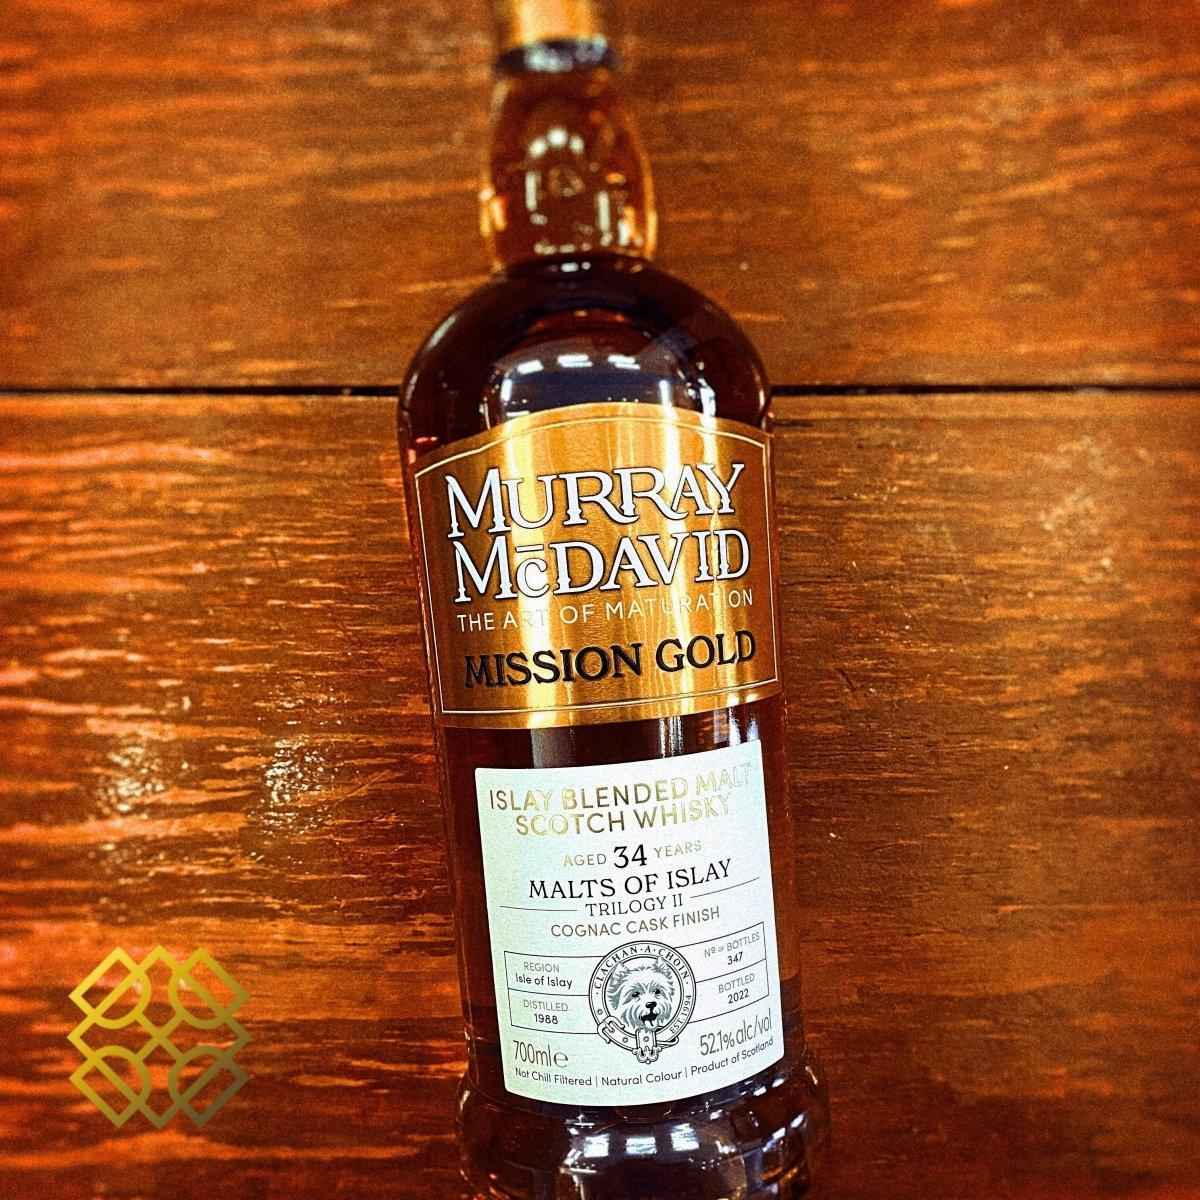 Murray McDavid - 34YO Islay Blended Malt, Cognac Finish, Trilogy II, 52.1%  Type : Blended malt whisky 威士忌